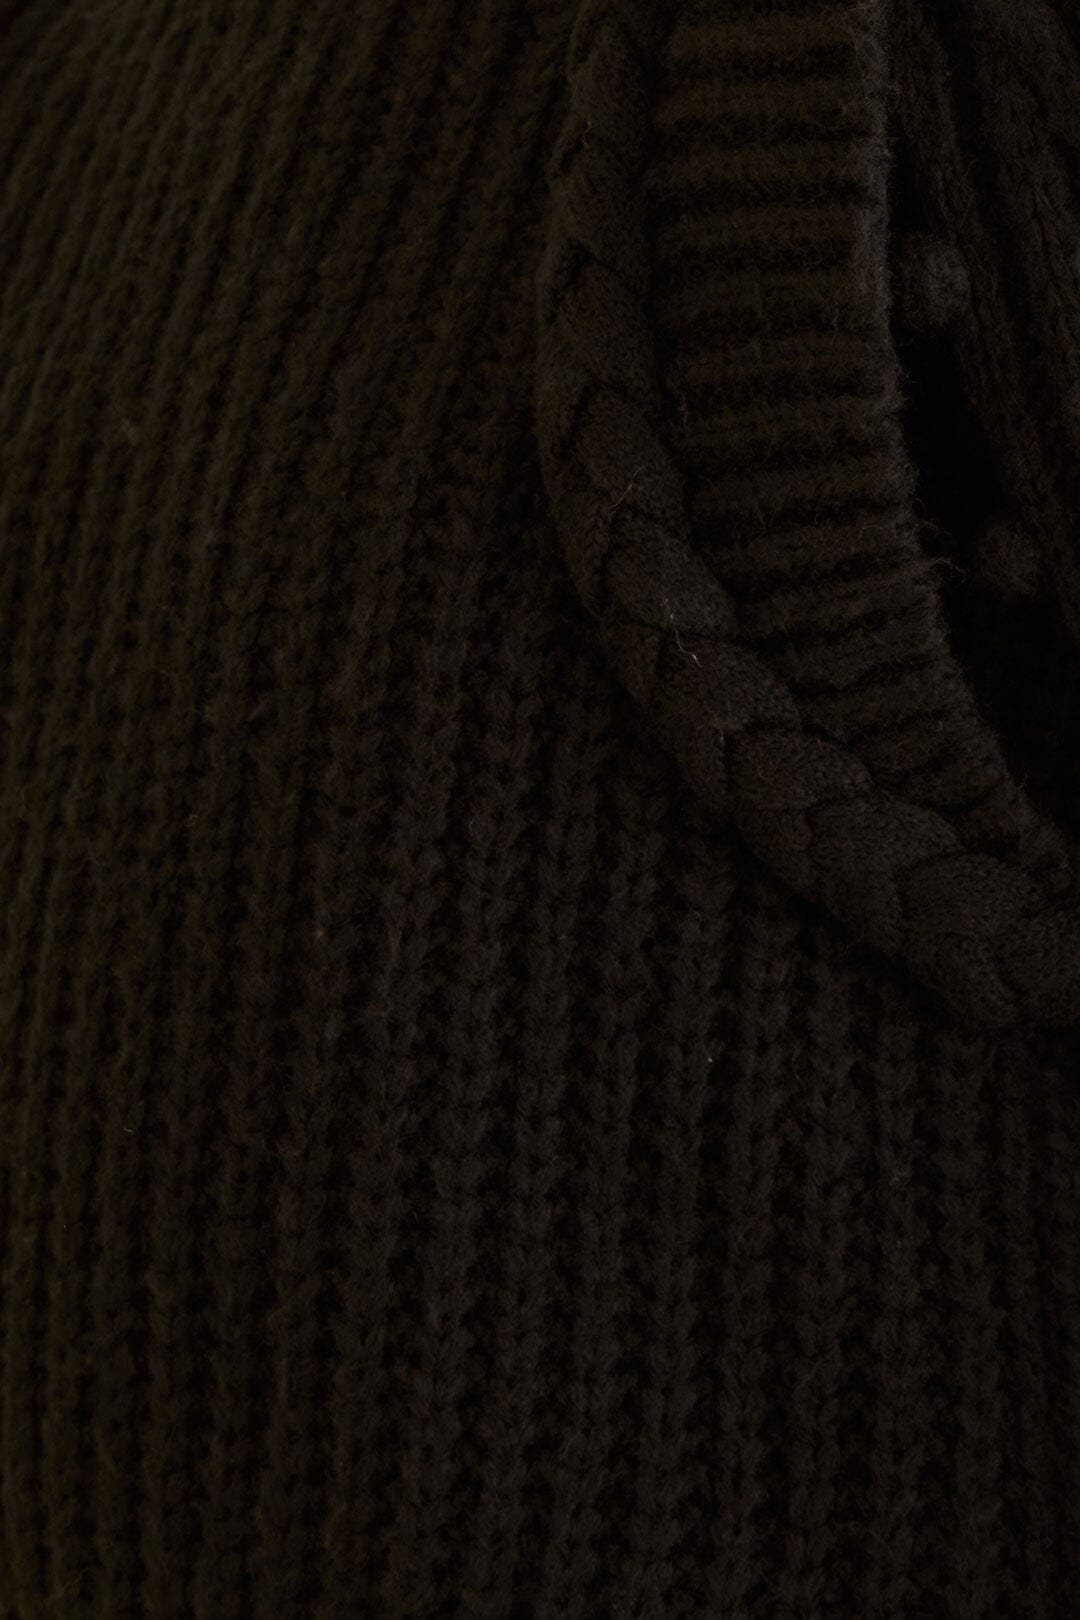 Black Braided Sweater